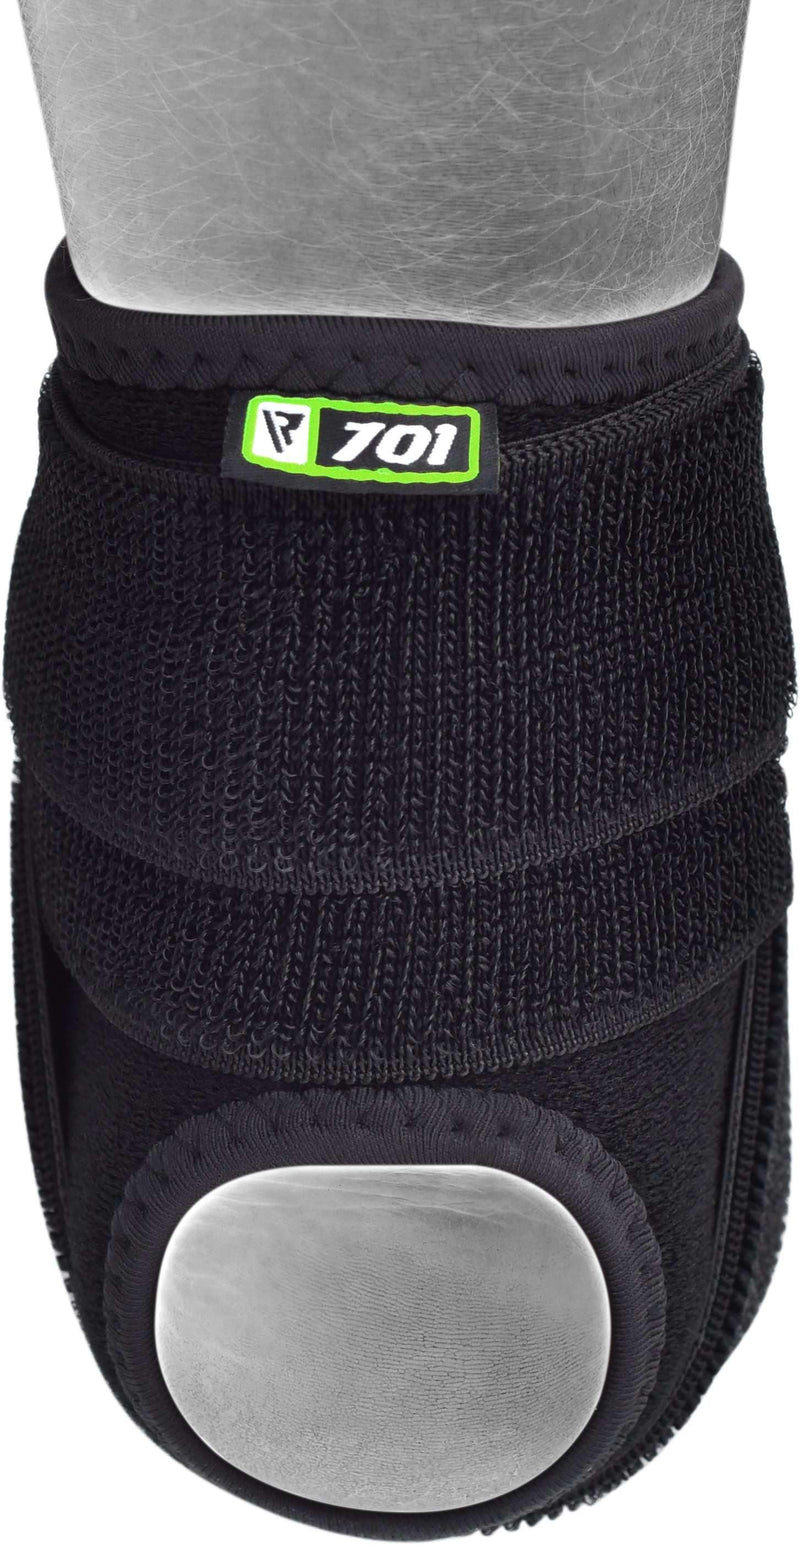 RDX A701 Black Tobillera ajustable para protección contra esguinces - Chelo Sports